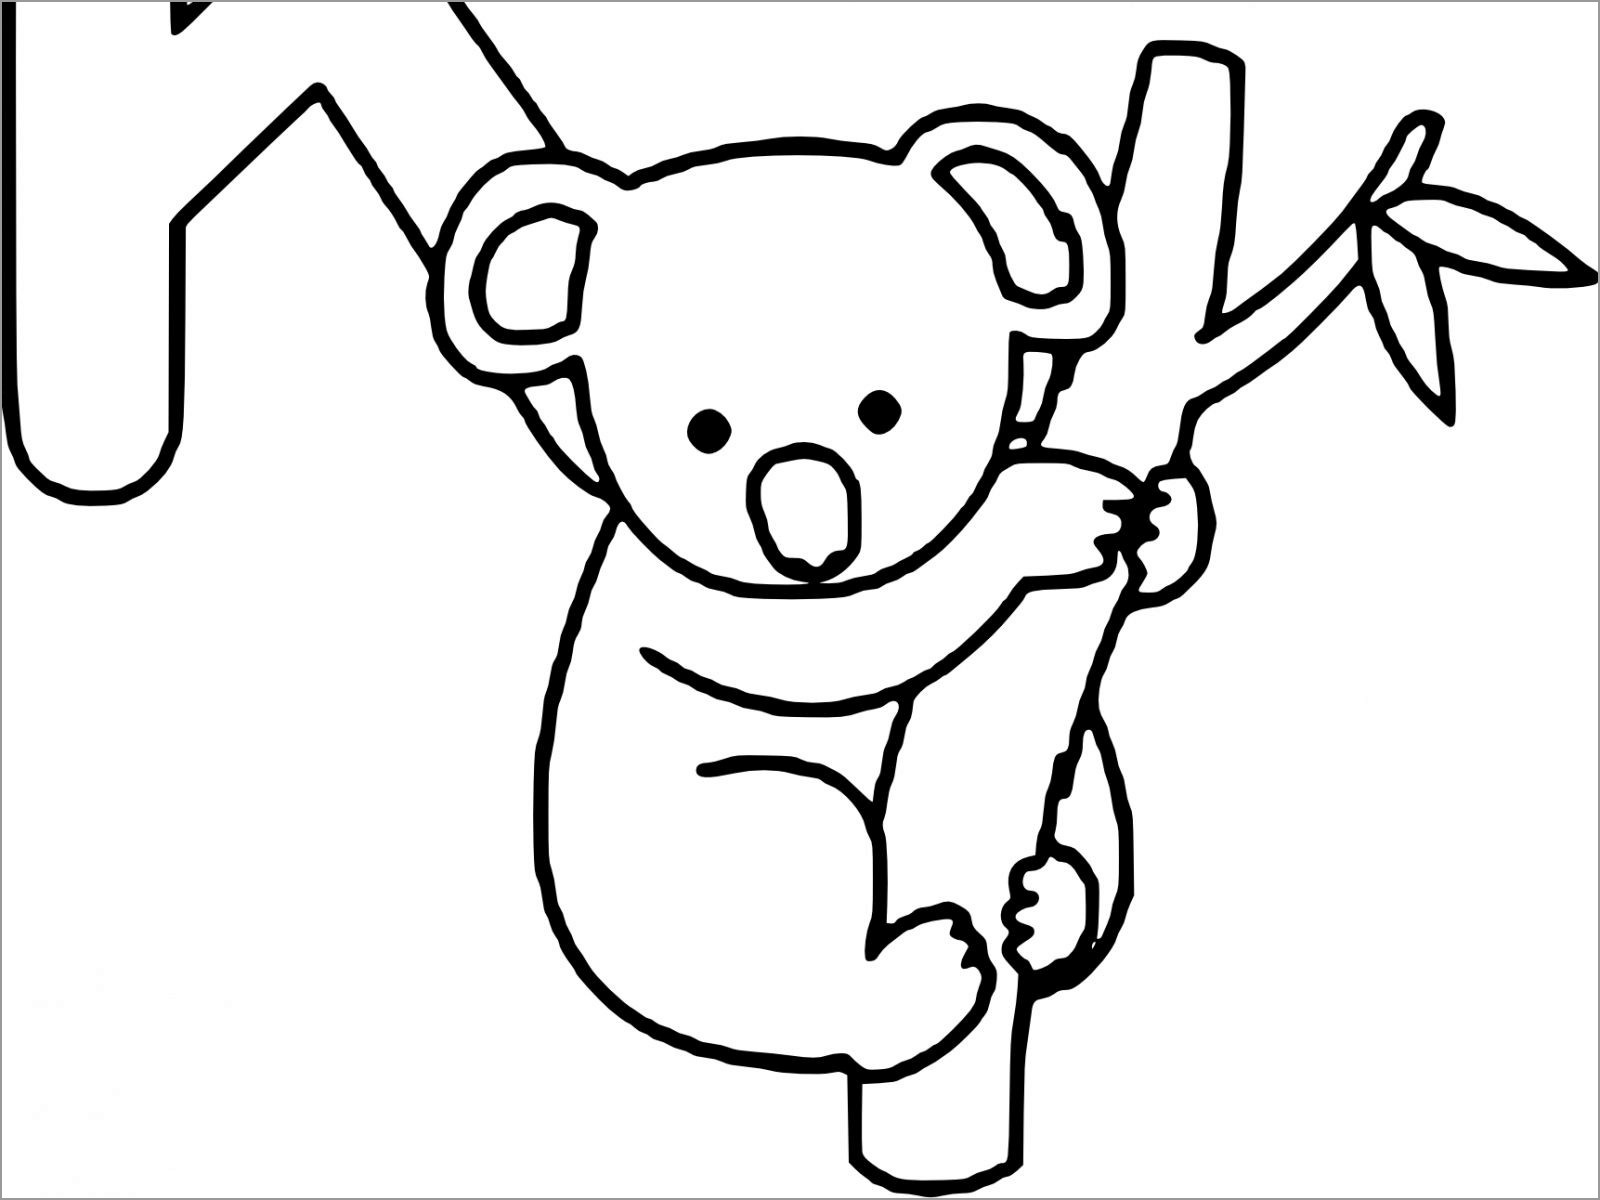 Cute Baby Koala Coloring Page   ColoringBay